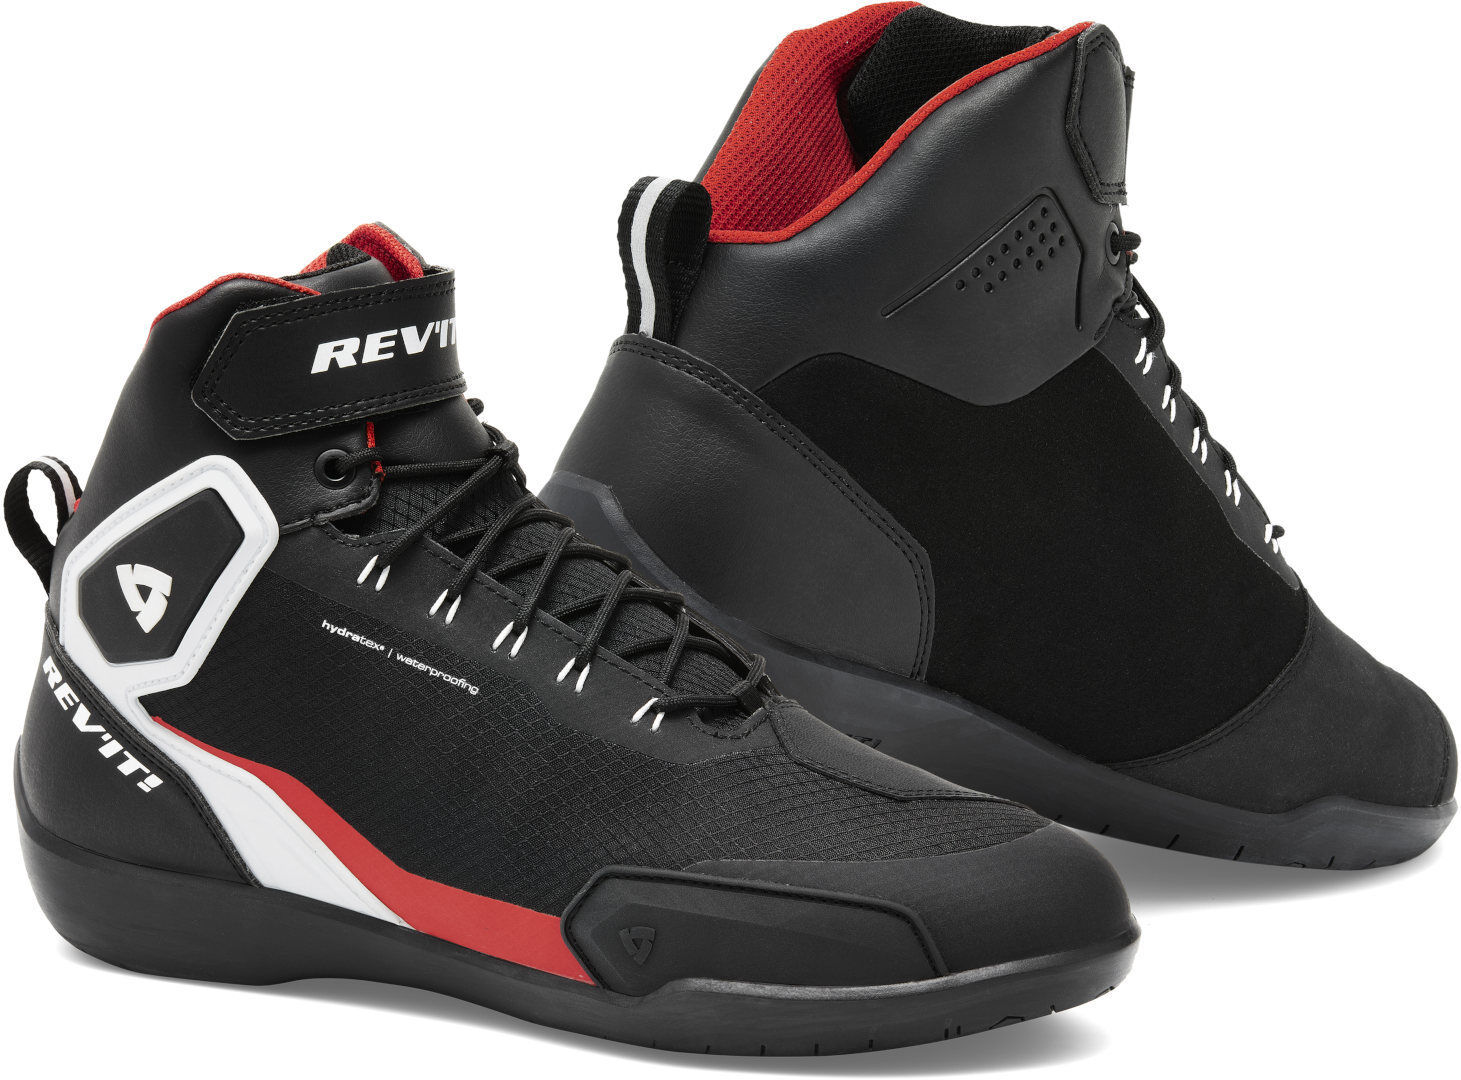 Revit G-Force H2O Zapatos impermeables para motocicletas - Negro Blanco Rojo (44)